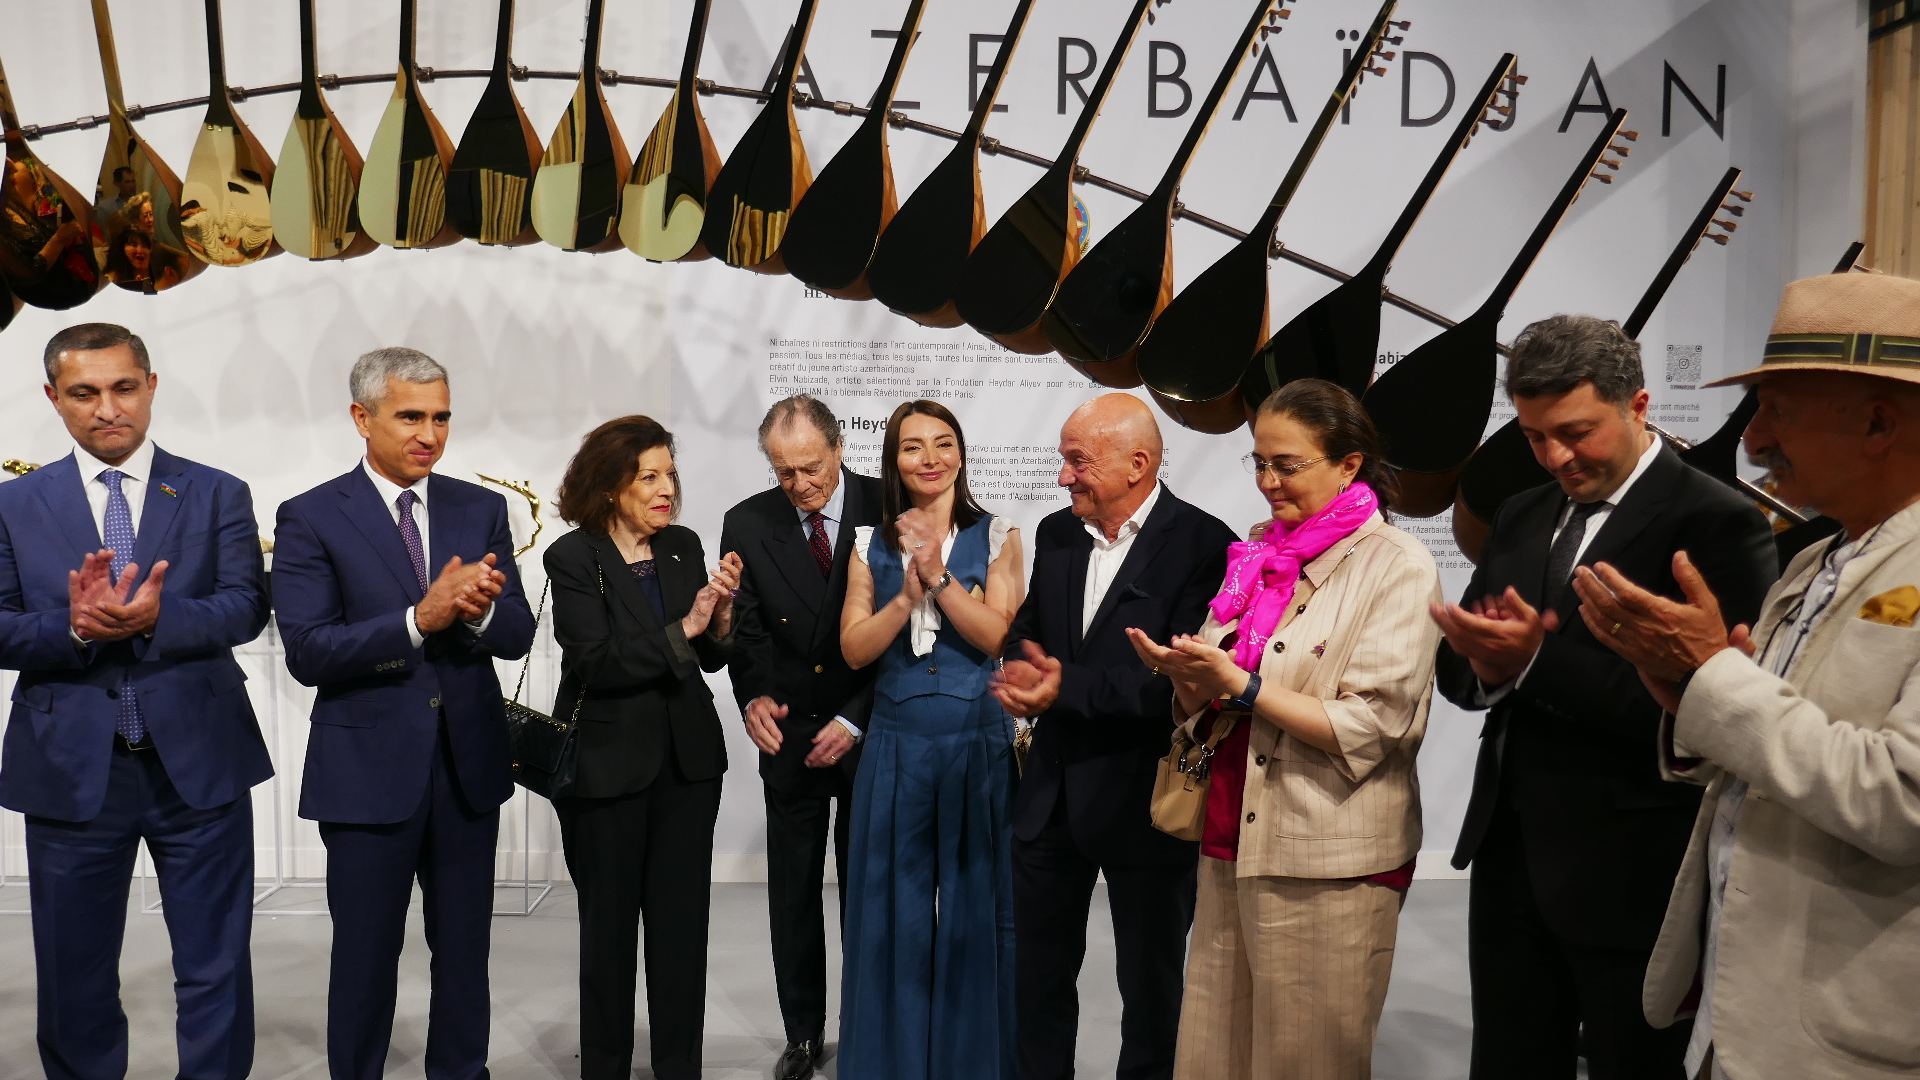 Azerbaijan represented at International Biennale “Revelations” with support of Heydar Aliyev Foundation (PHOTO)